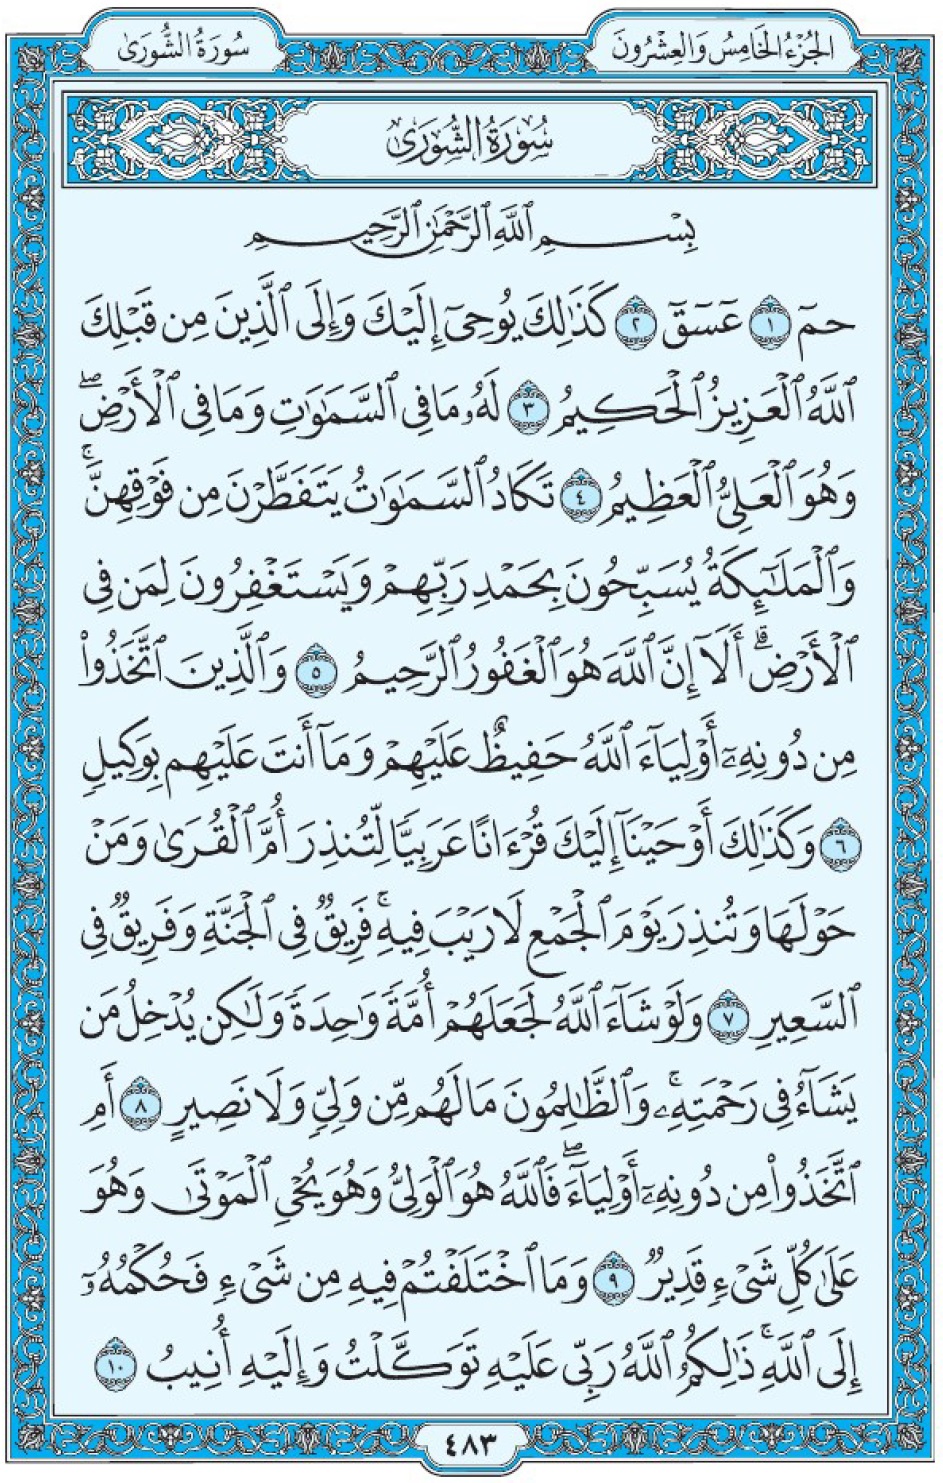 Коран Мединский мусхаф страница 483, сура 42 Ащ-Щура سورة ٤٢ الشورى 